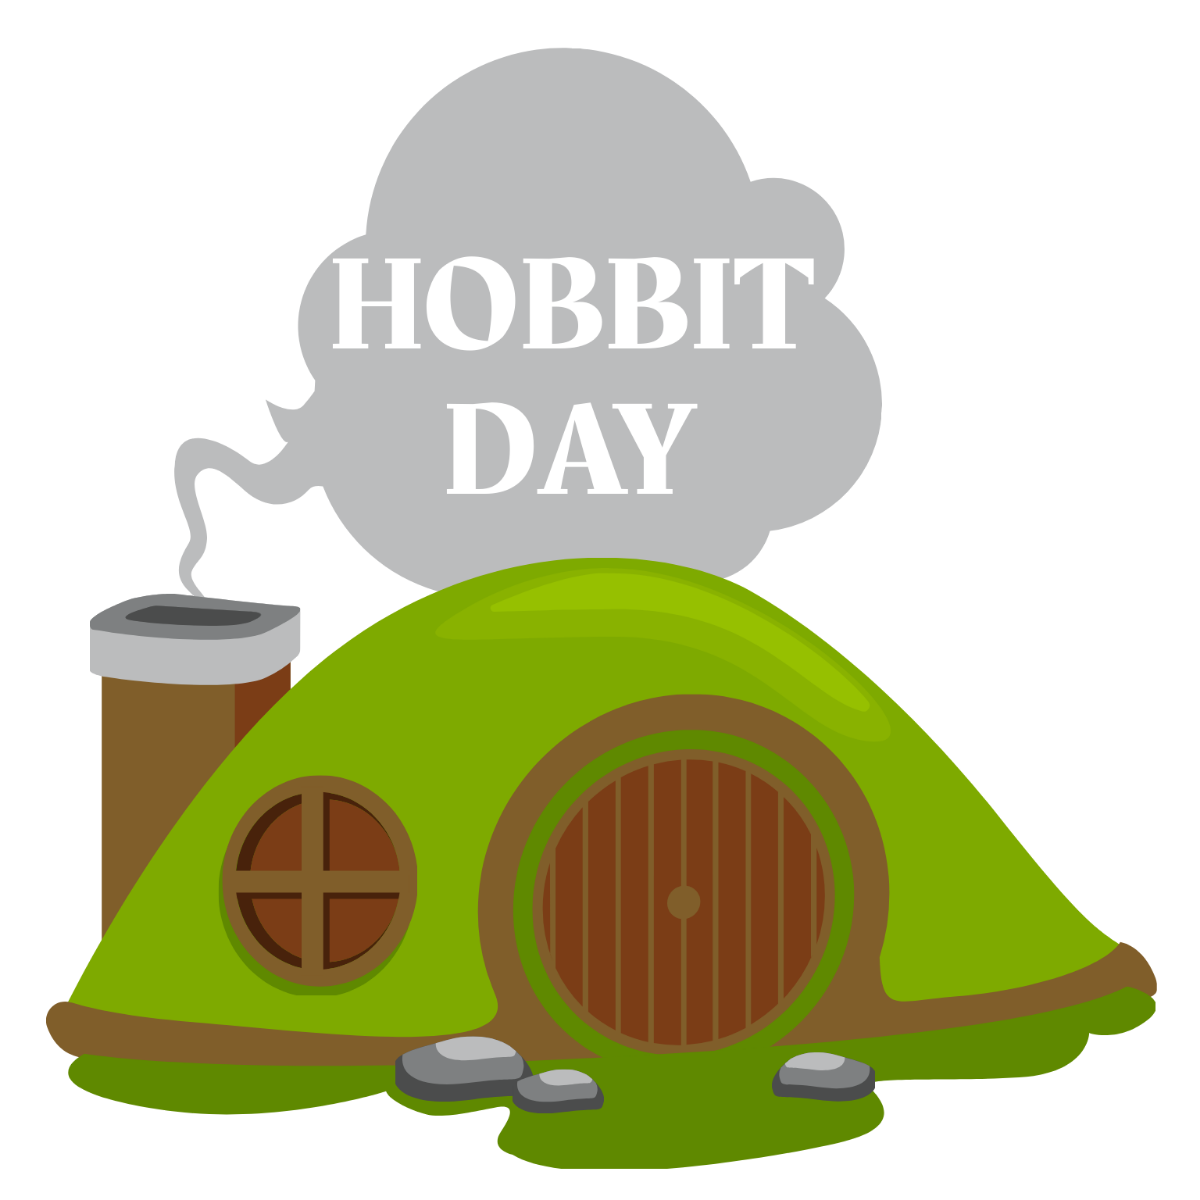 Hobbit Day Illustration